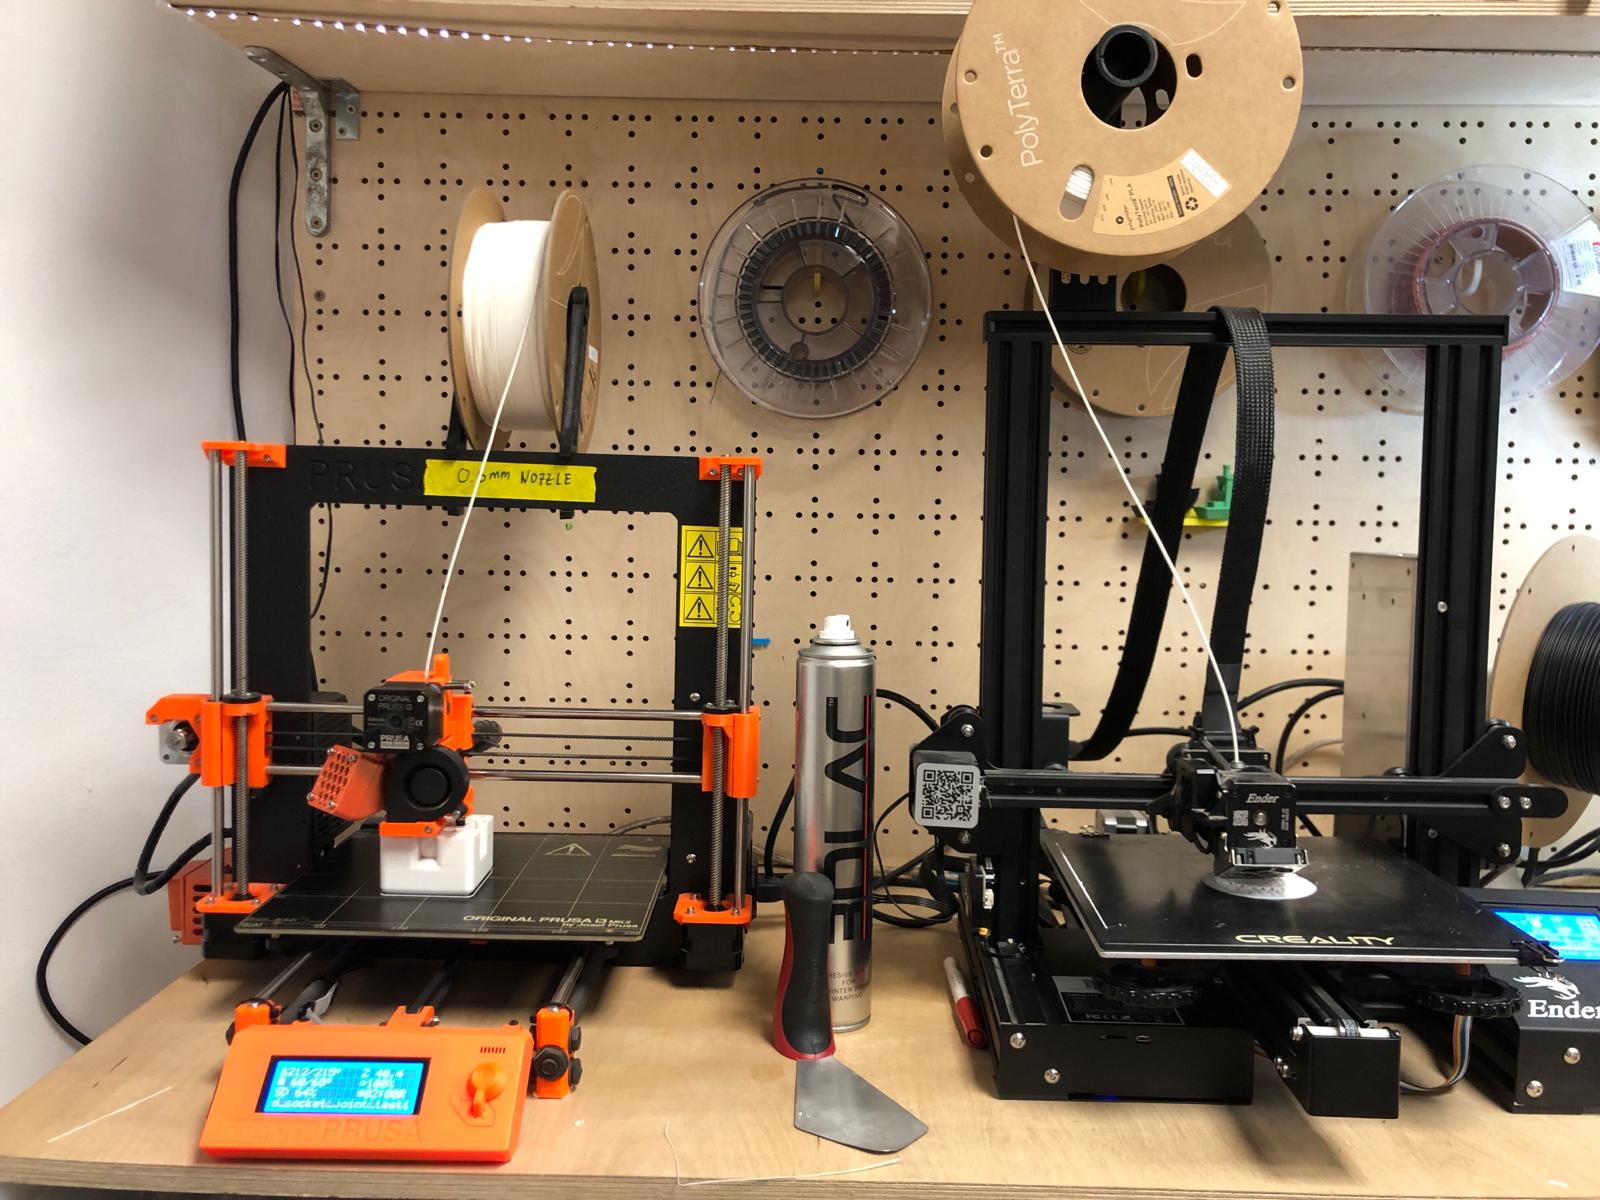 image of a 3D printer